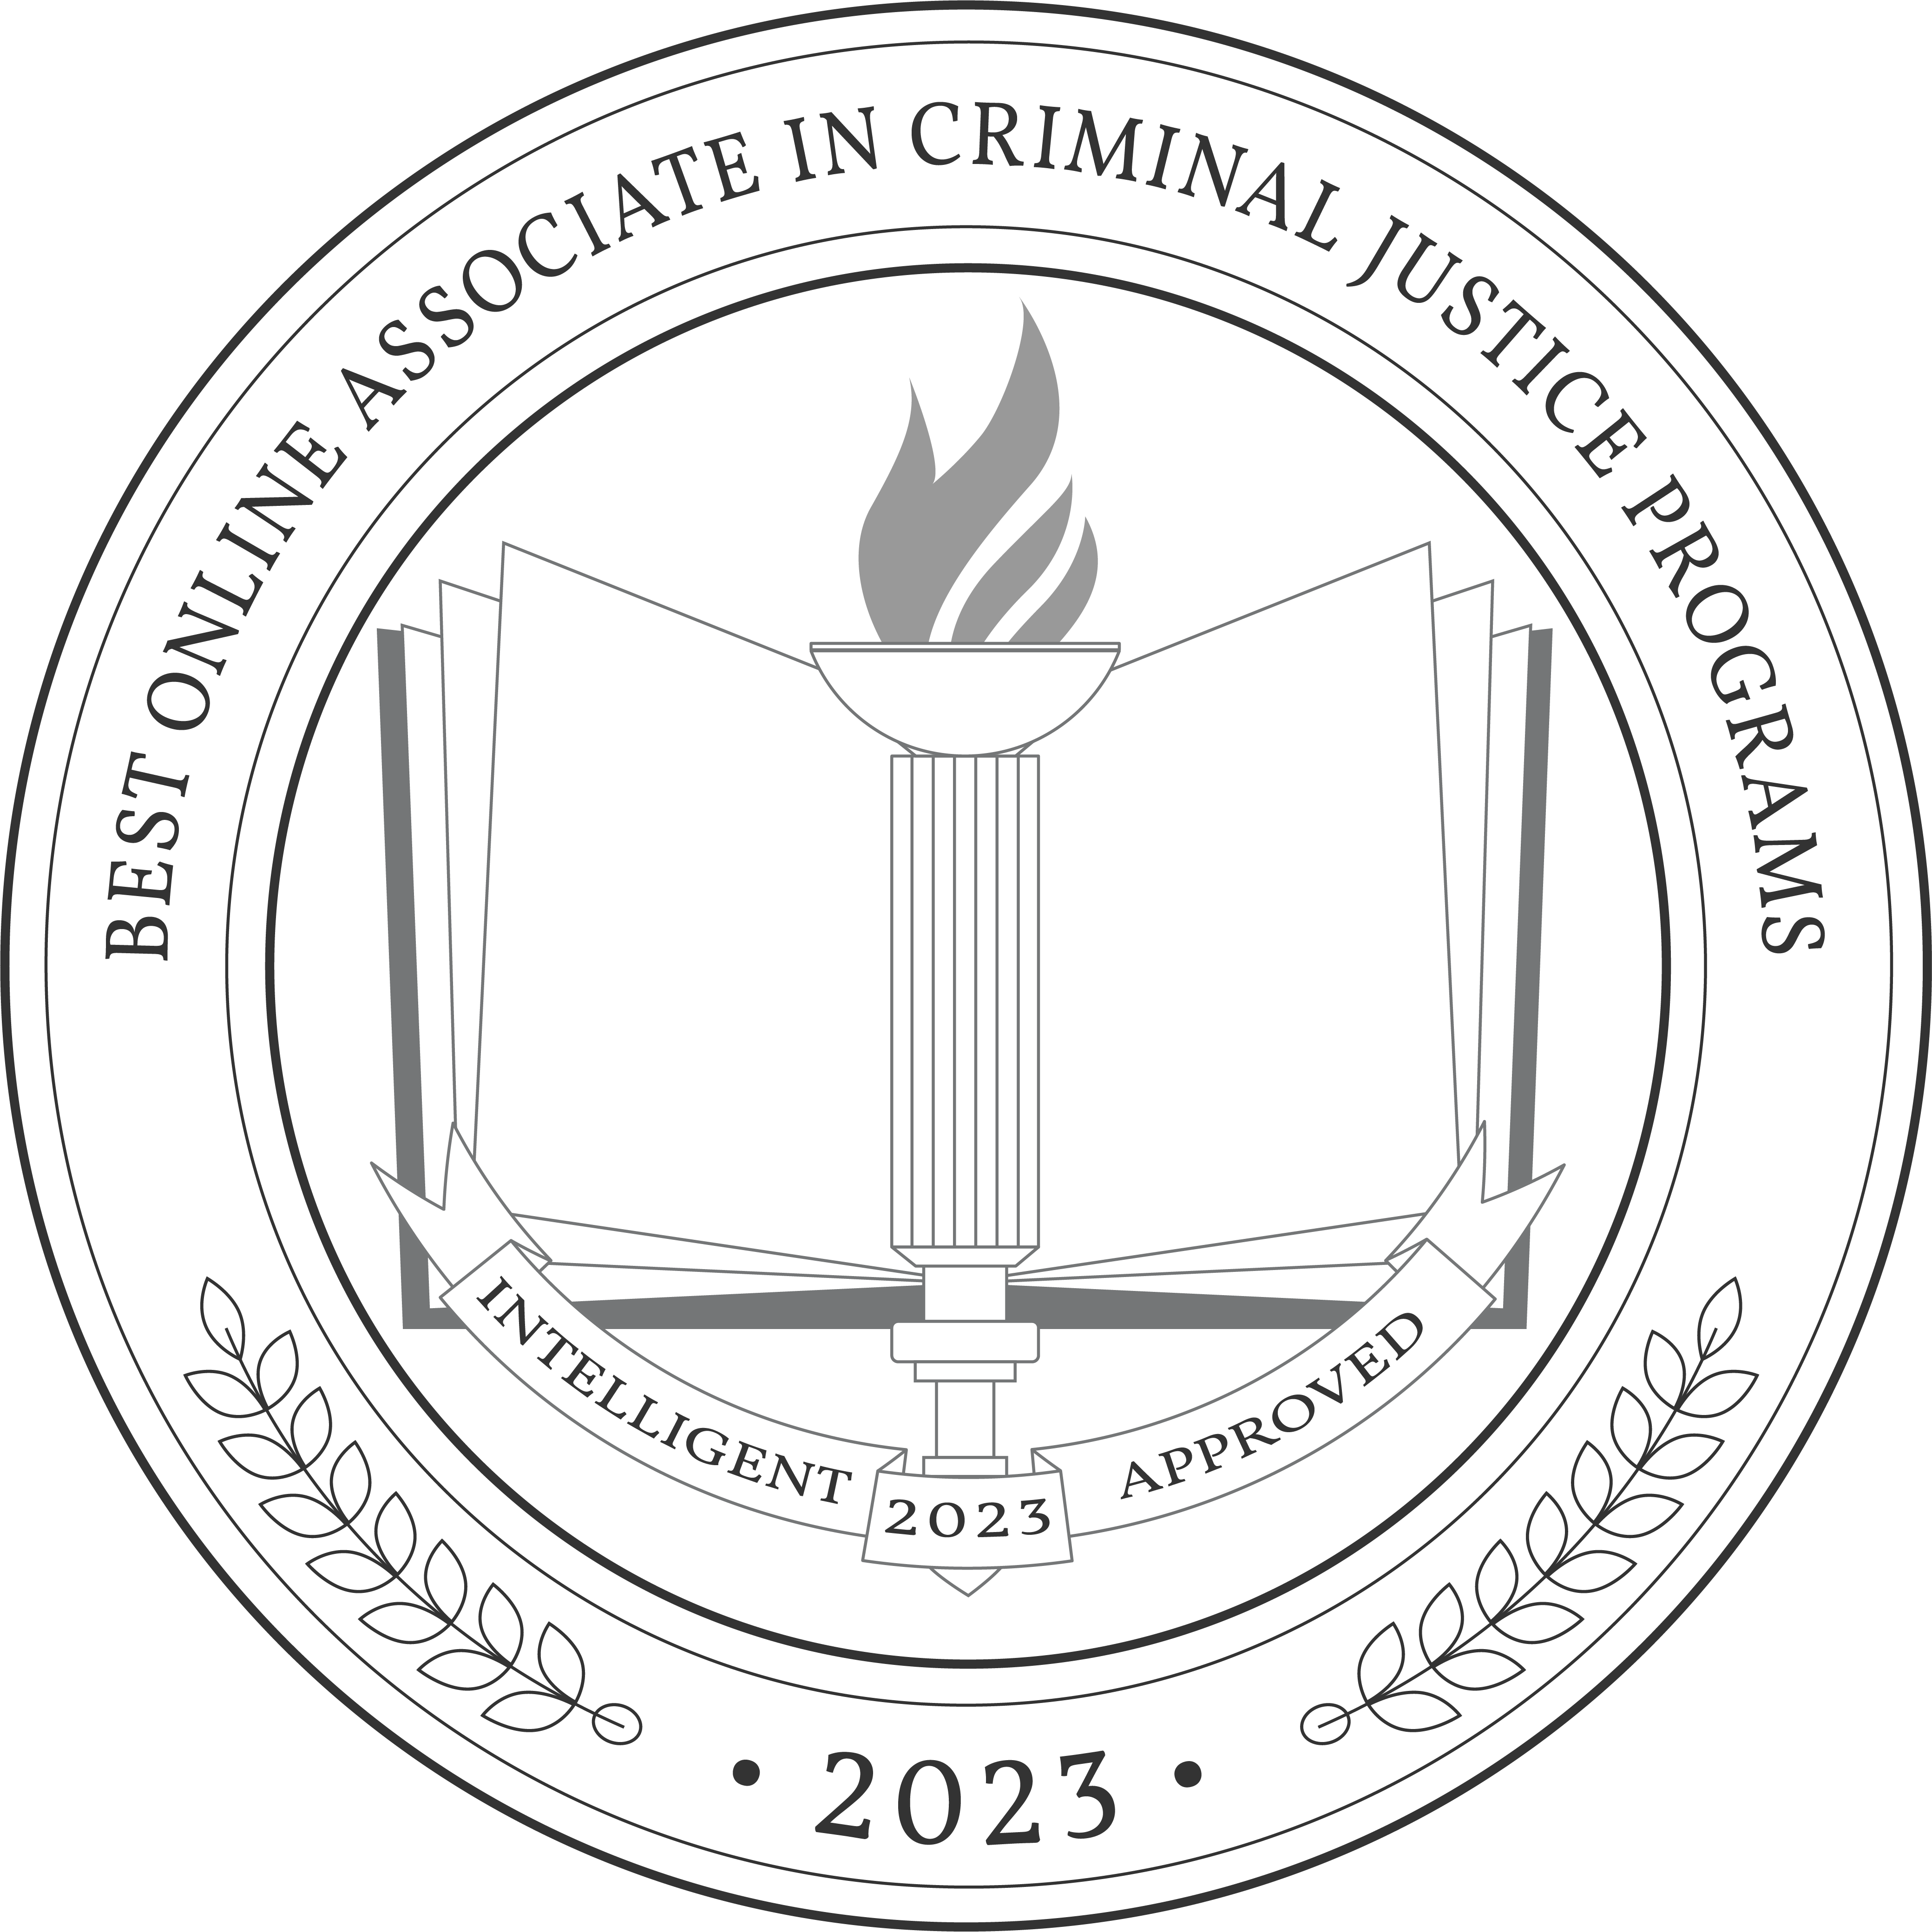 Best Online Associate in Criminal Justice Programs badge